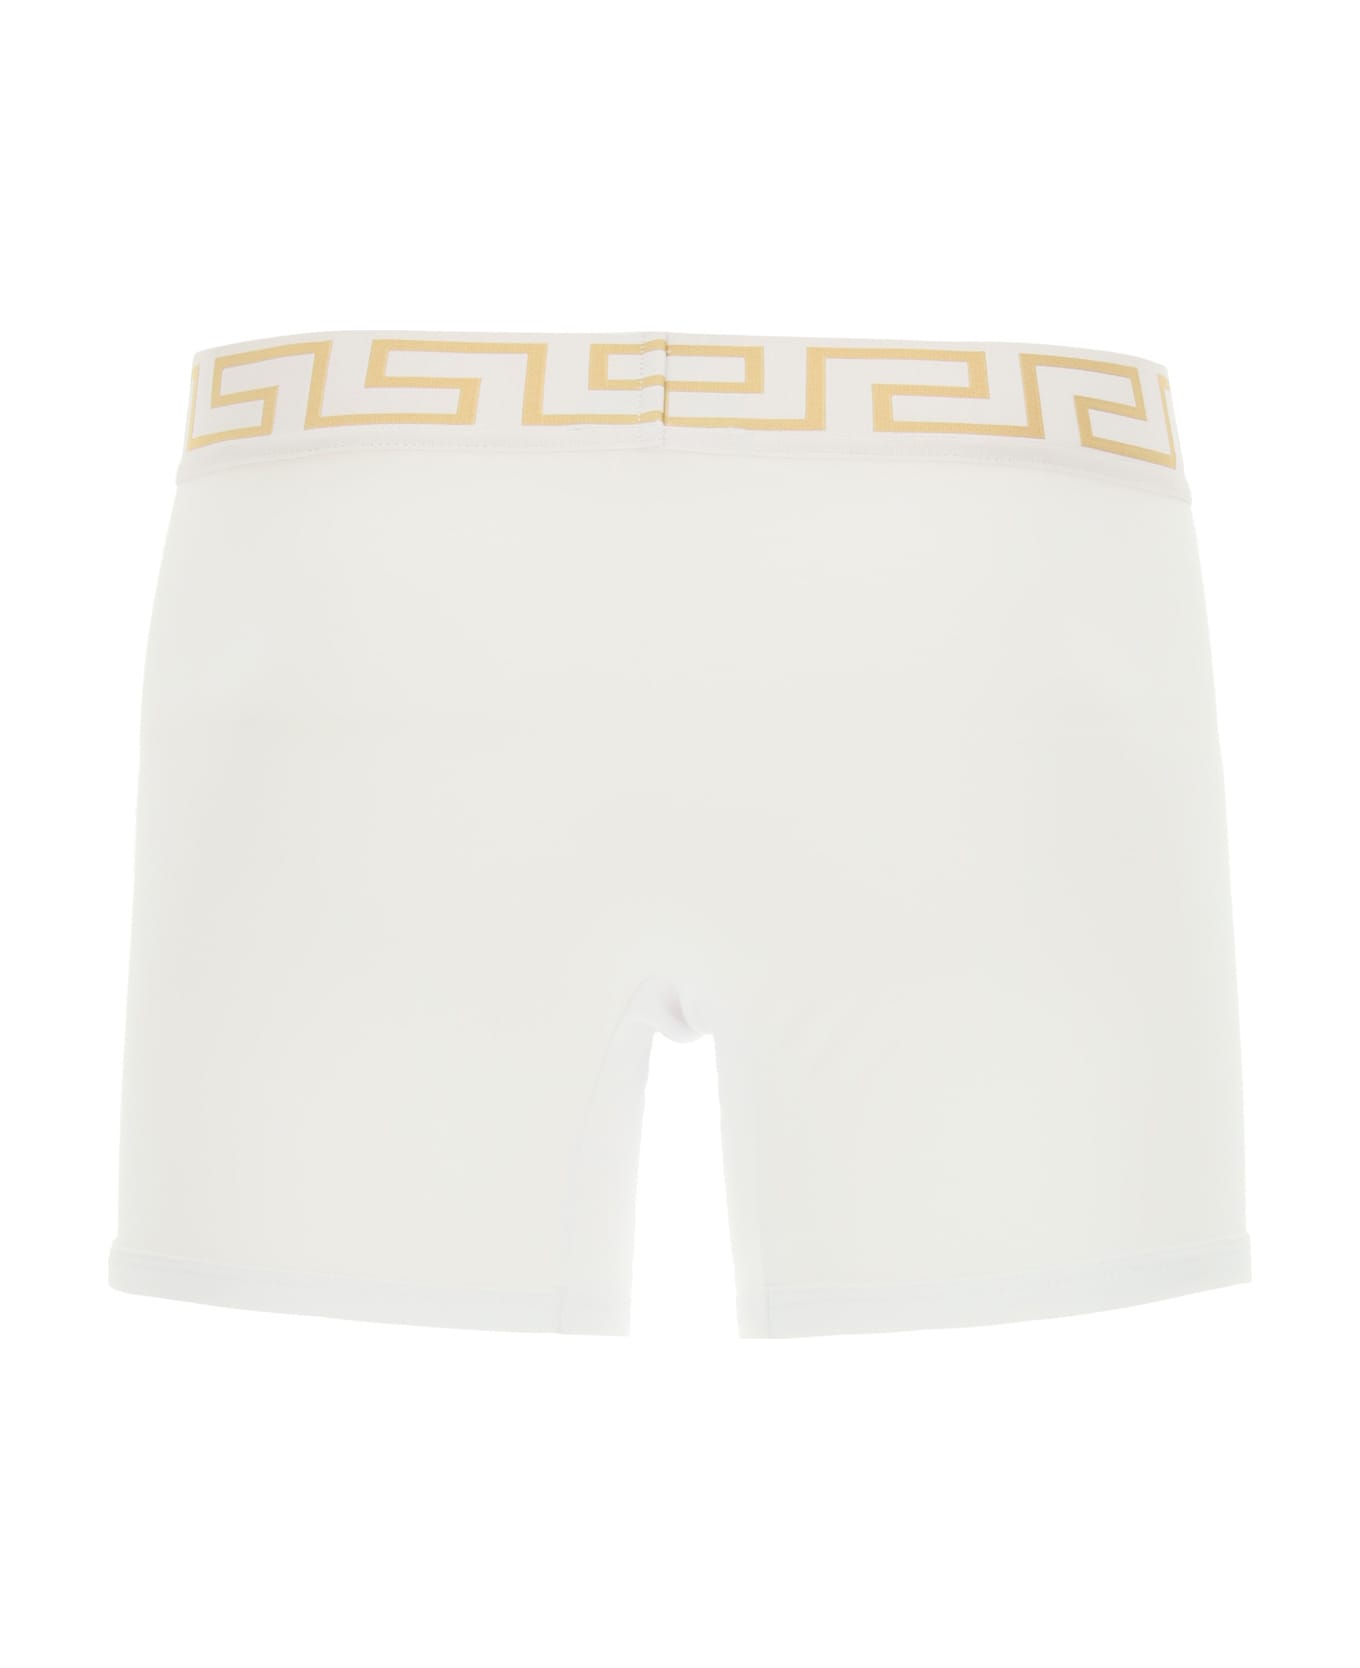 Versace Bi-pack Underwear Greca Border Trunks - BIANCO GRECA ORO スイムトランクス